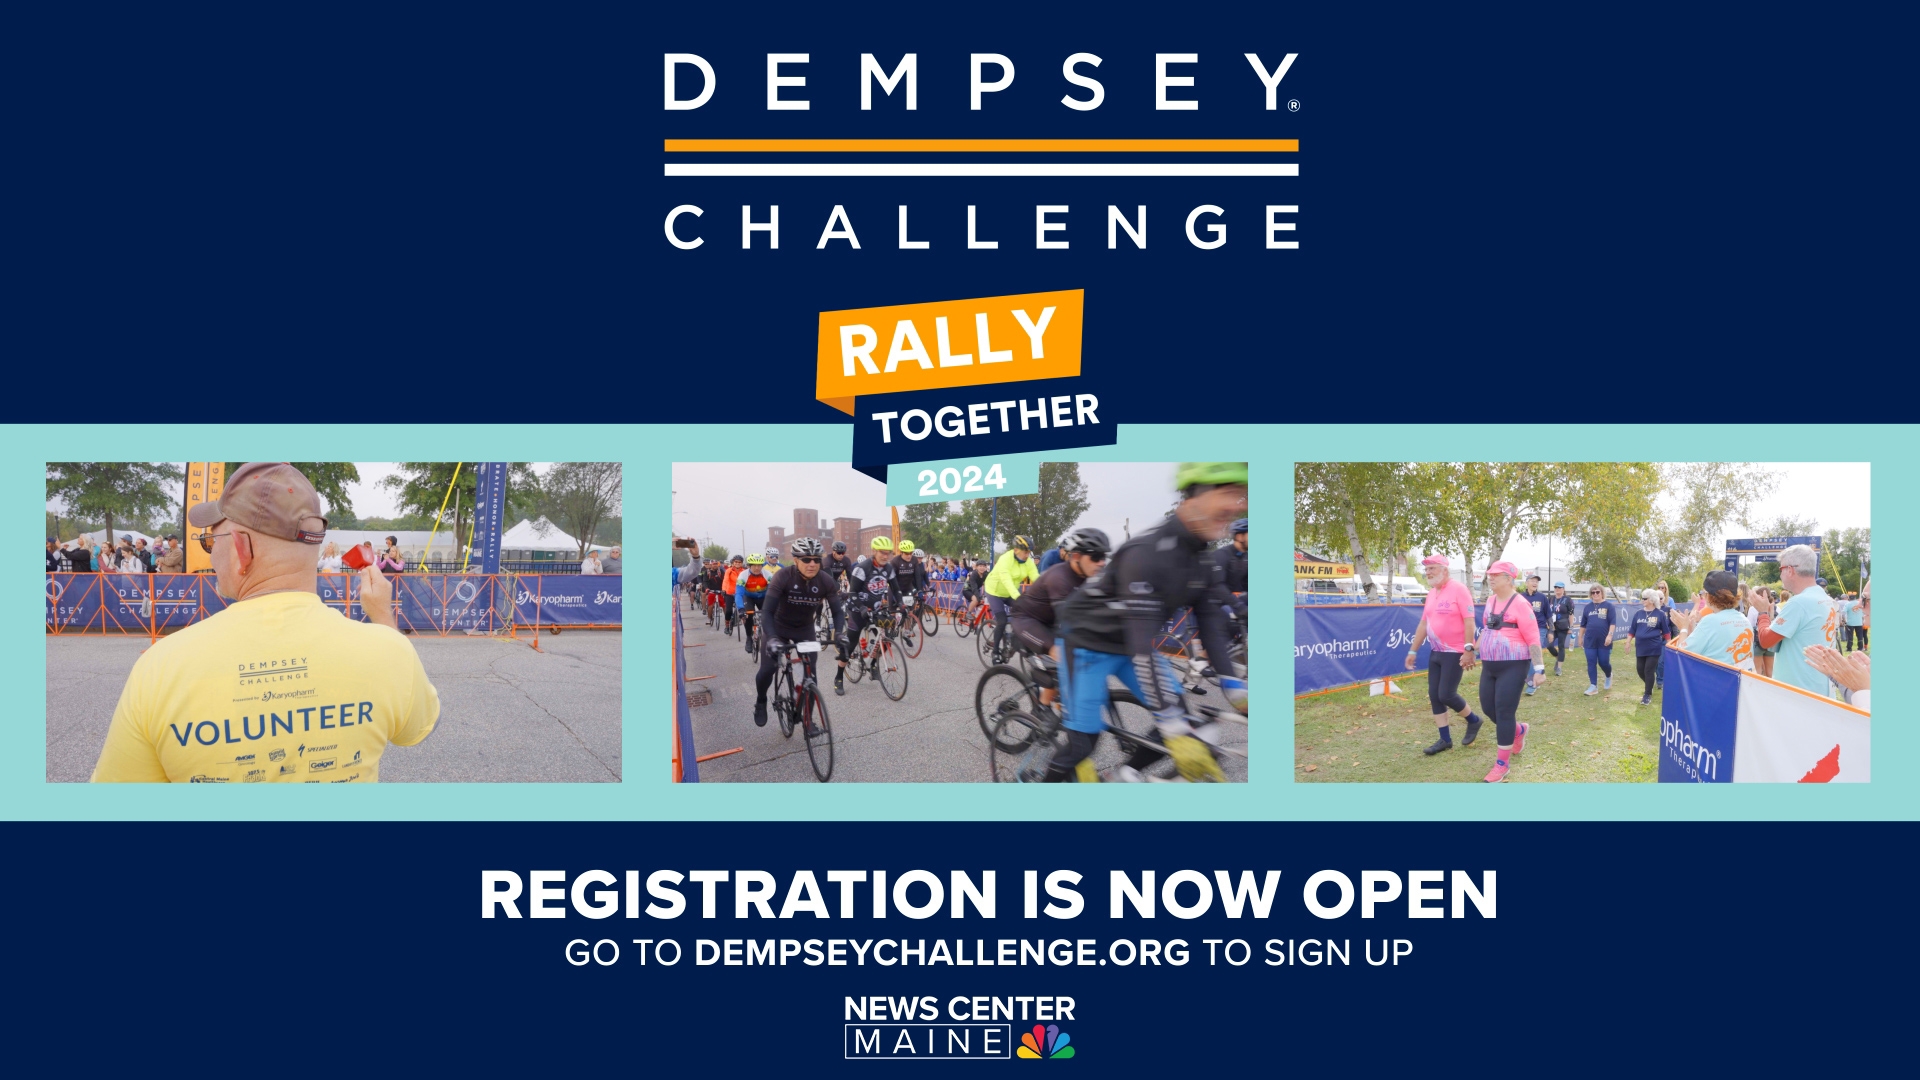 Register today at dempseychallenge.org